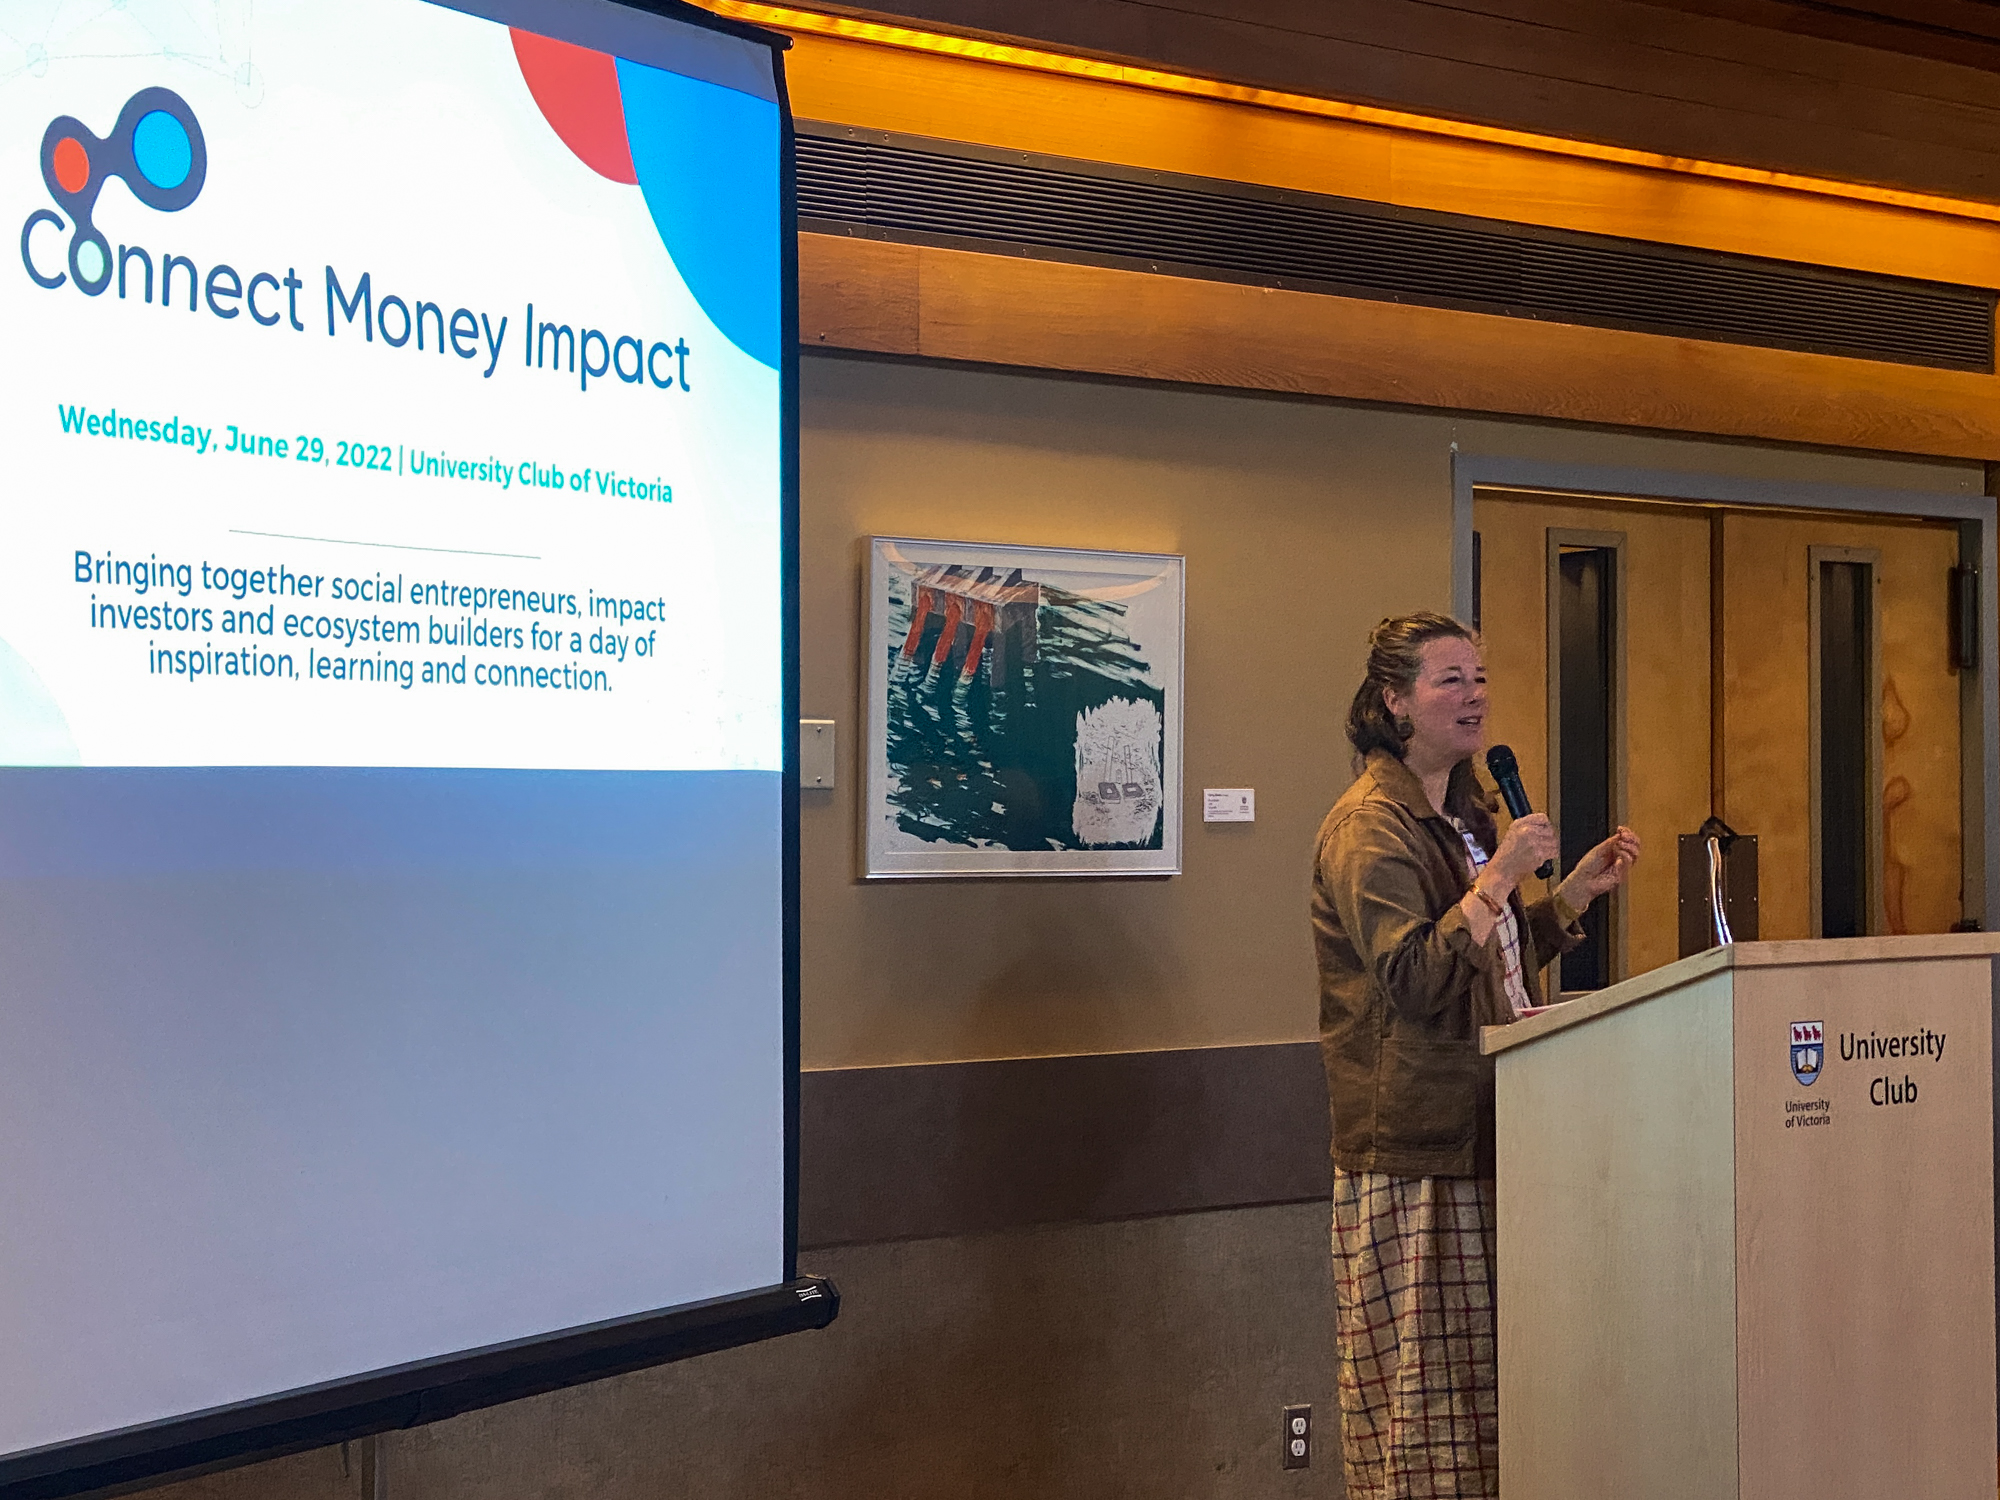 Connect Money Impact 2022